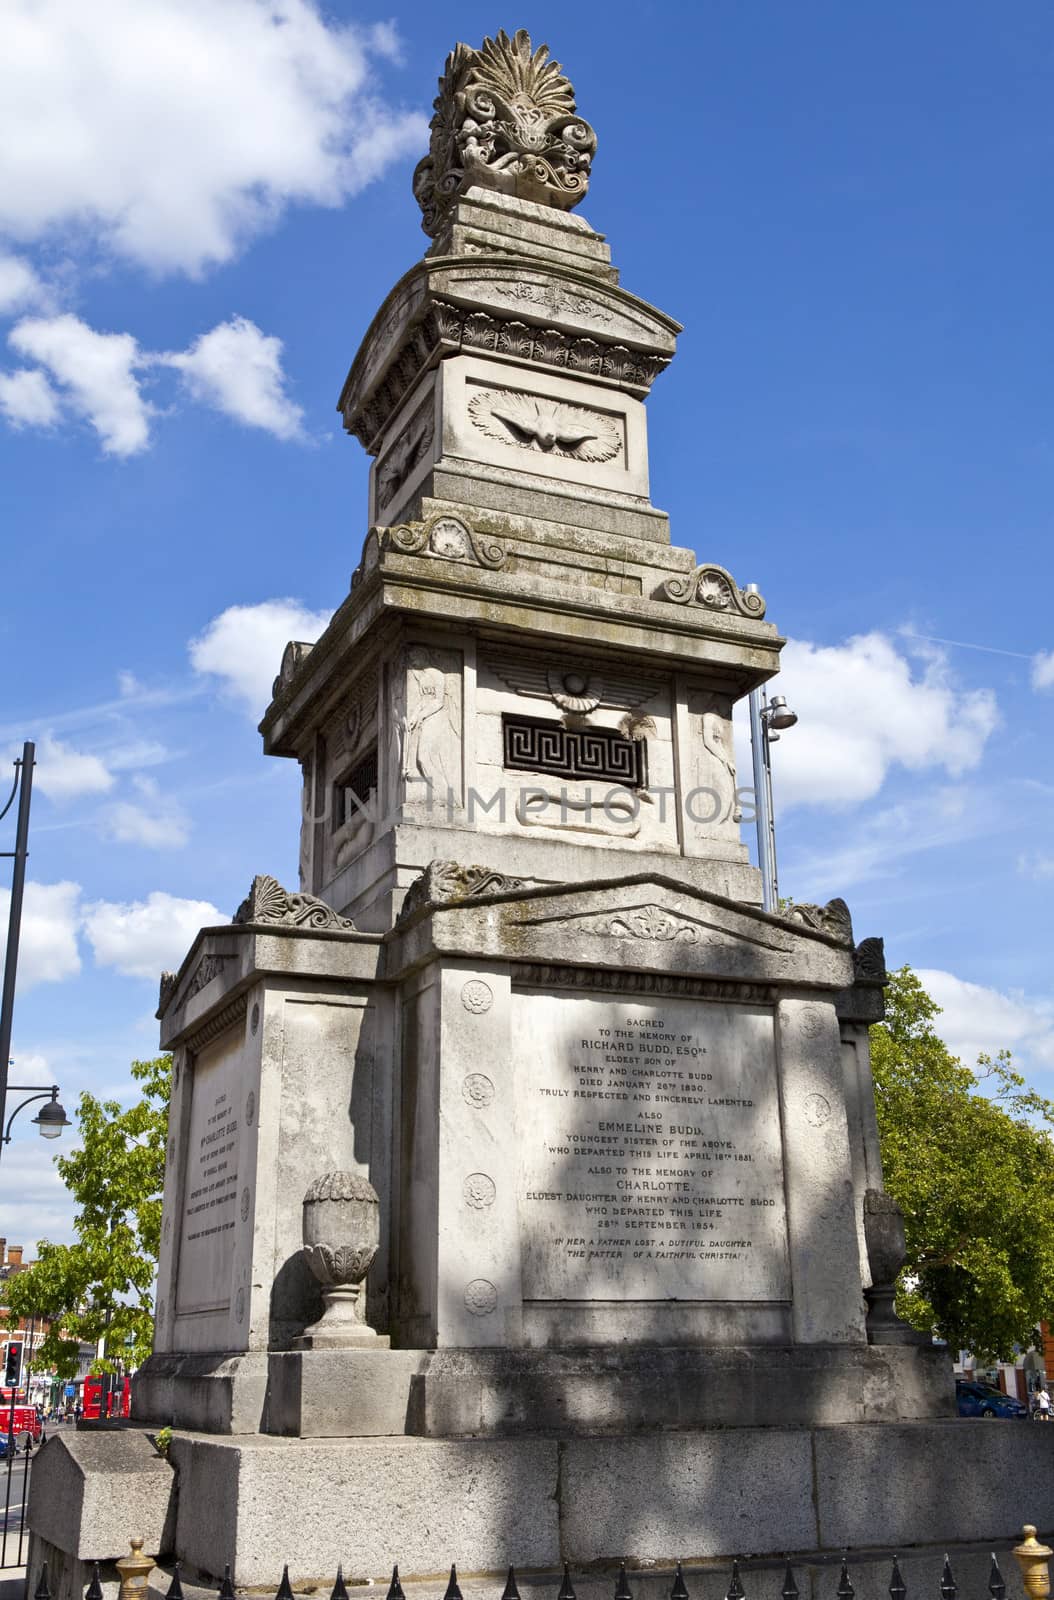 Budd Memorial in Brixton, London by chrisdorney